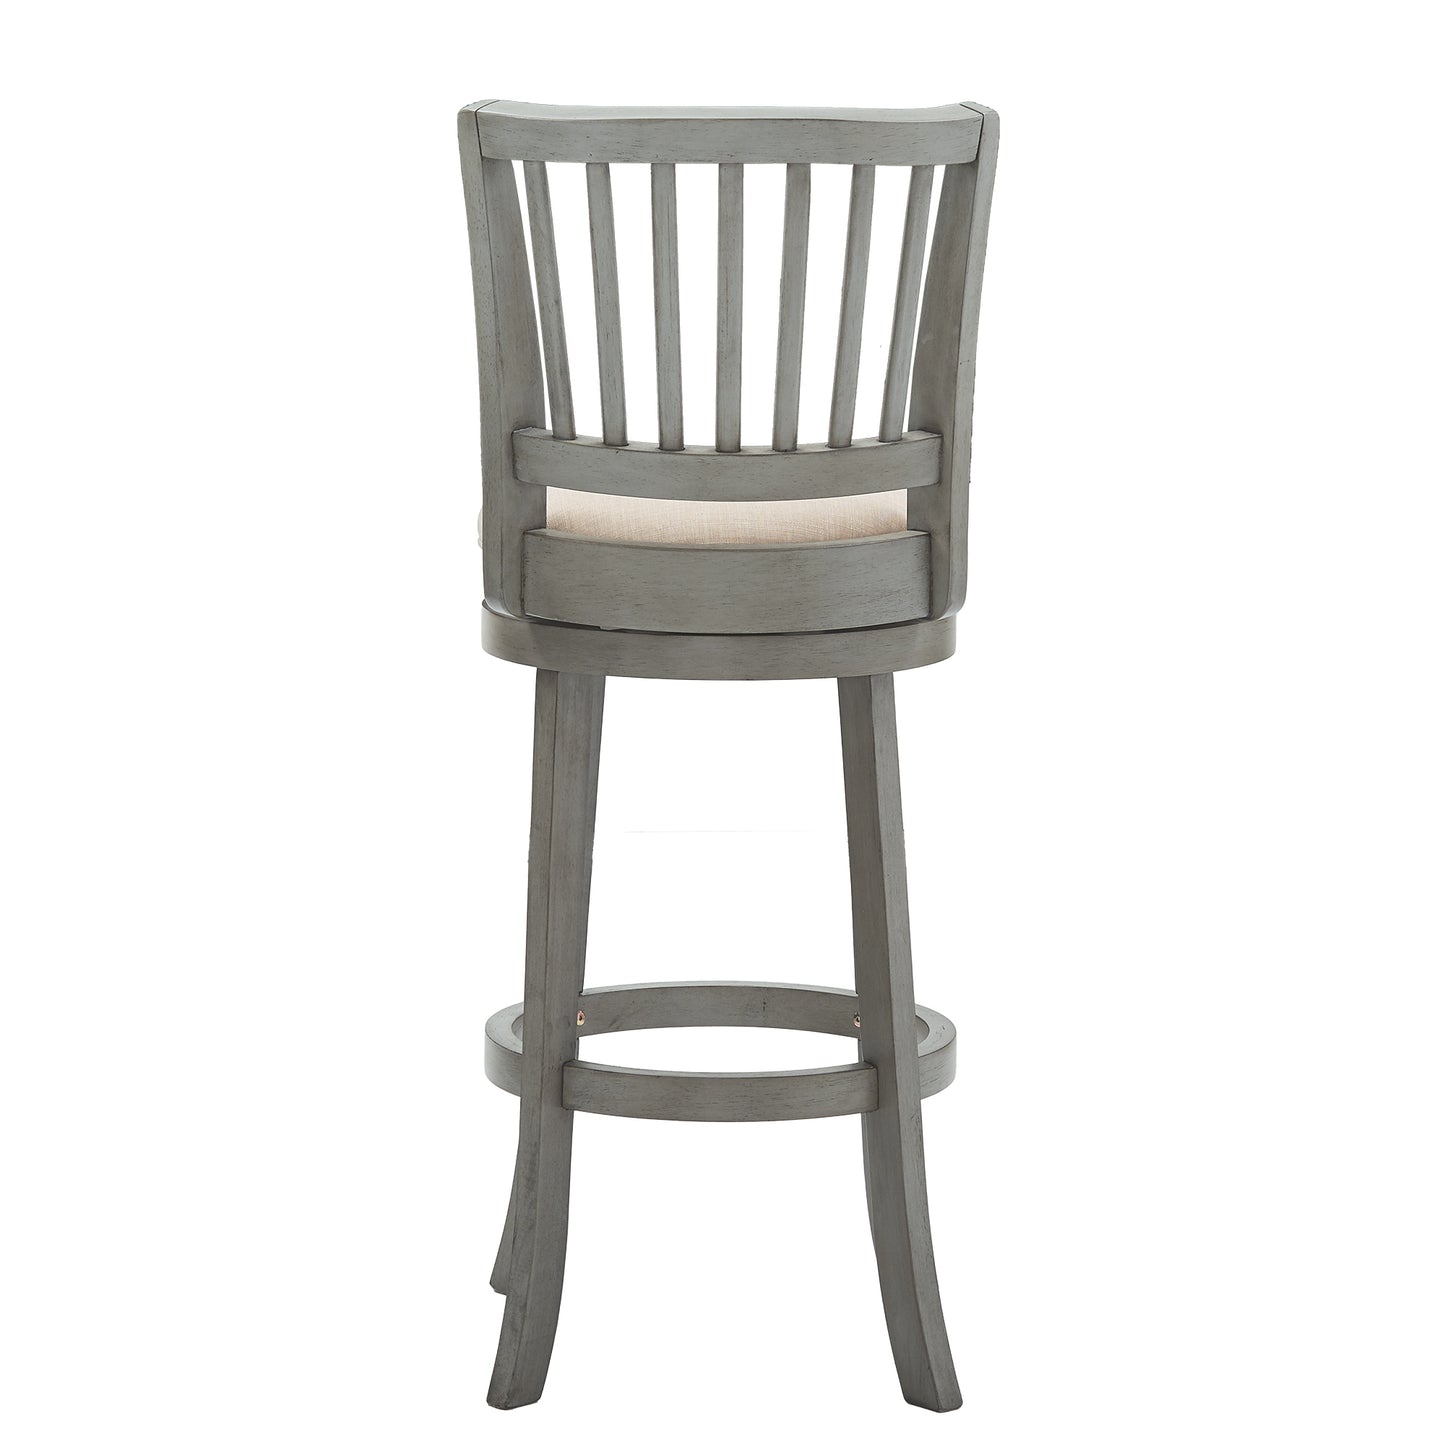 Slat Back Swivel Chair - 29" Bar Height, Antique Grey Finish, Beige Linen